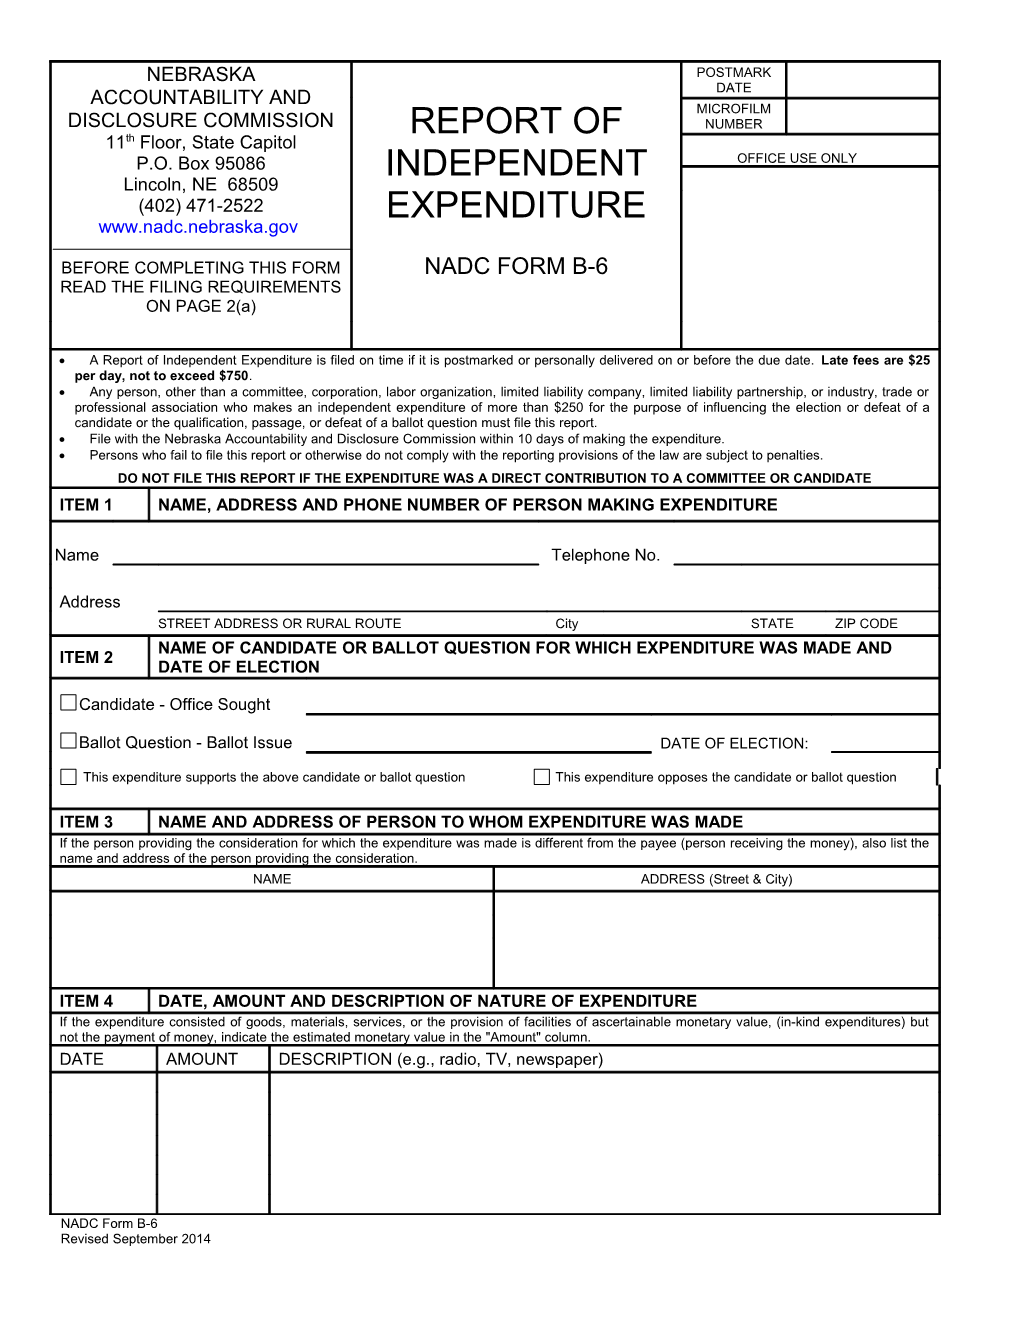 NADC Form B-6 Revised September 2014